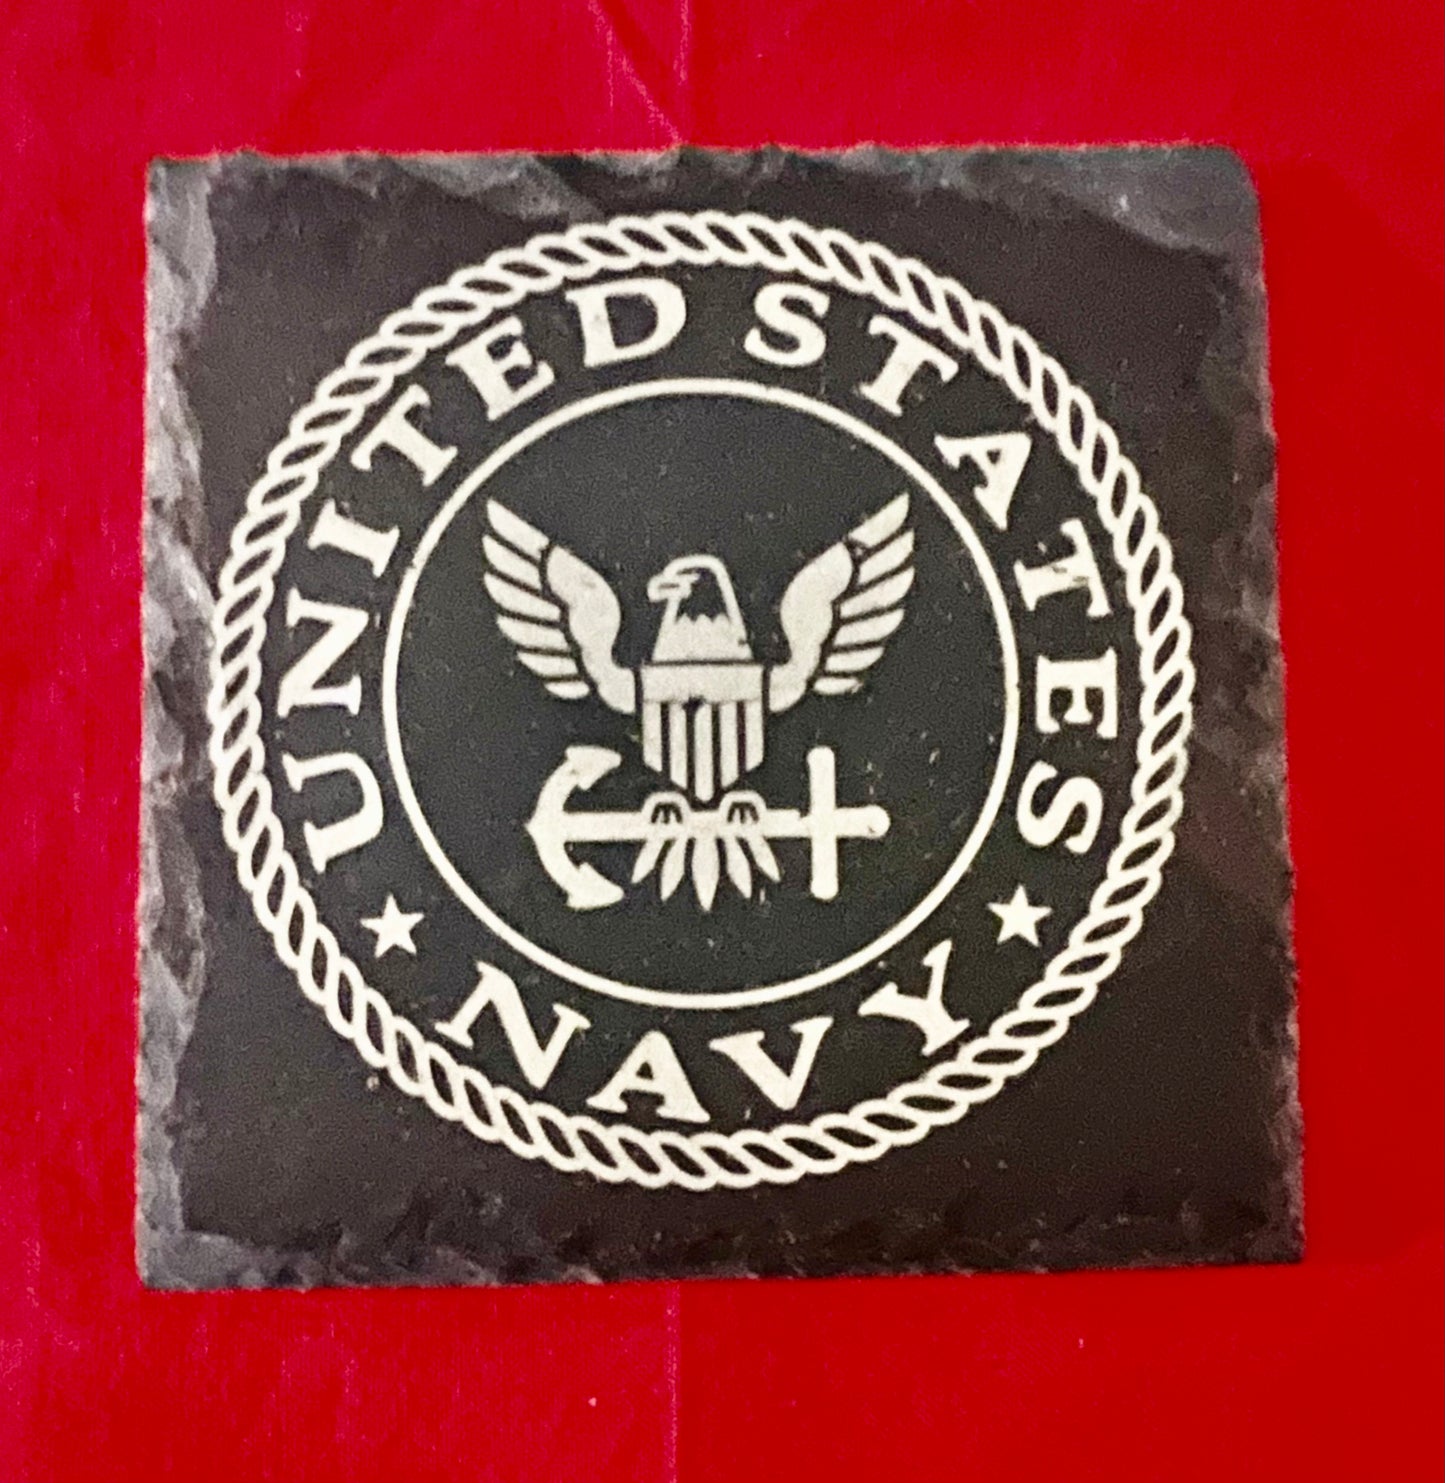 US Navy slate coaster